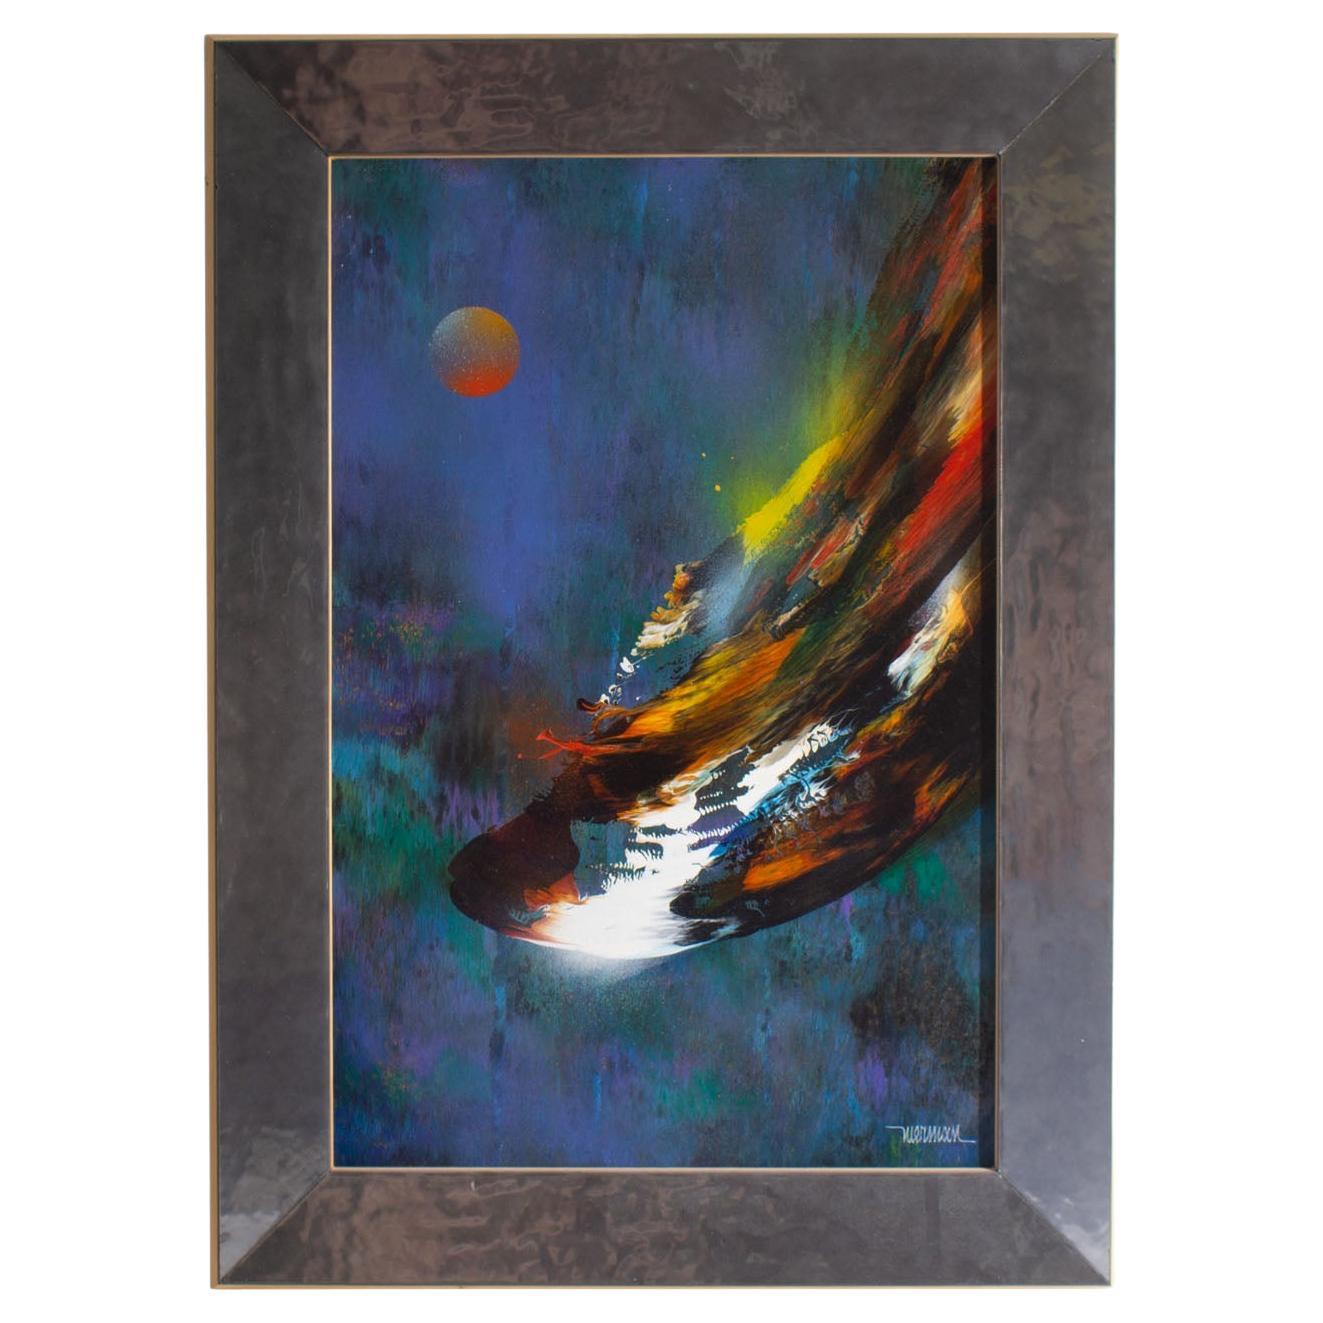 Leonardo Nierman Signed 1970s “Cosmic Wind” Oil on Board Painting